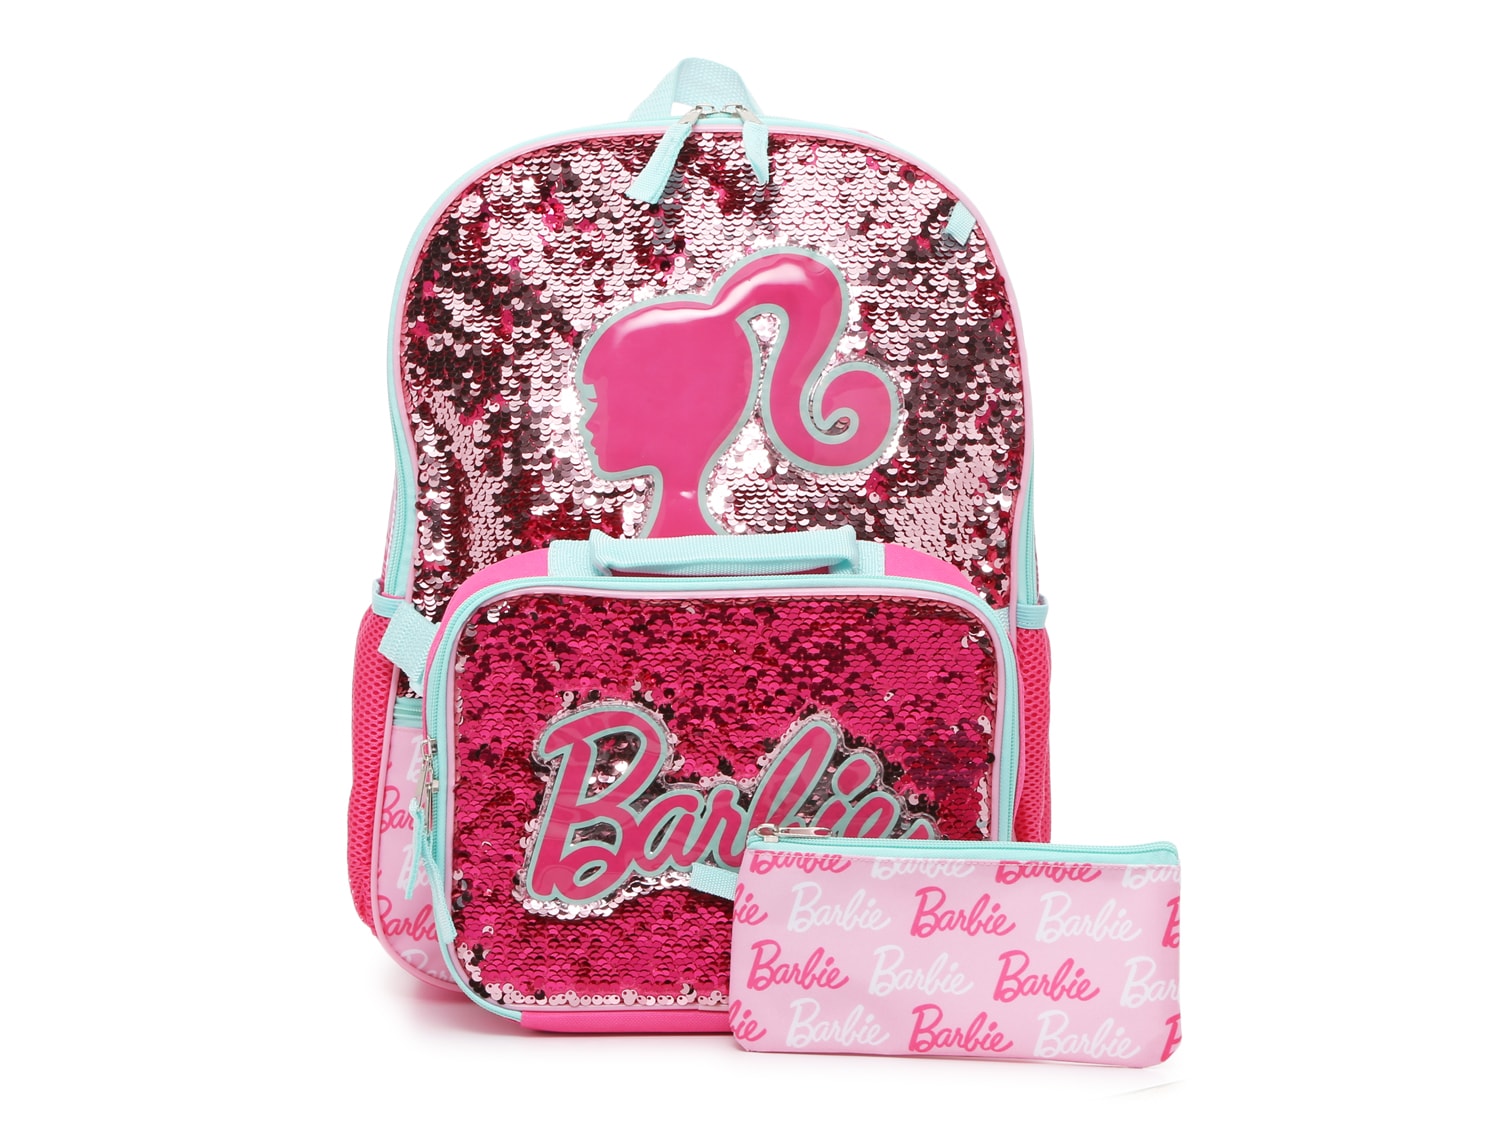 Heys Mattel Barbie Econo Backpack